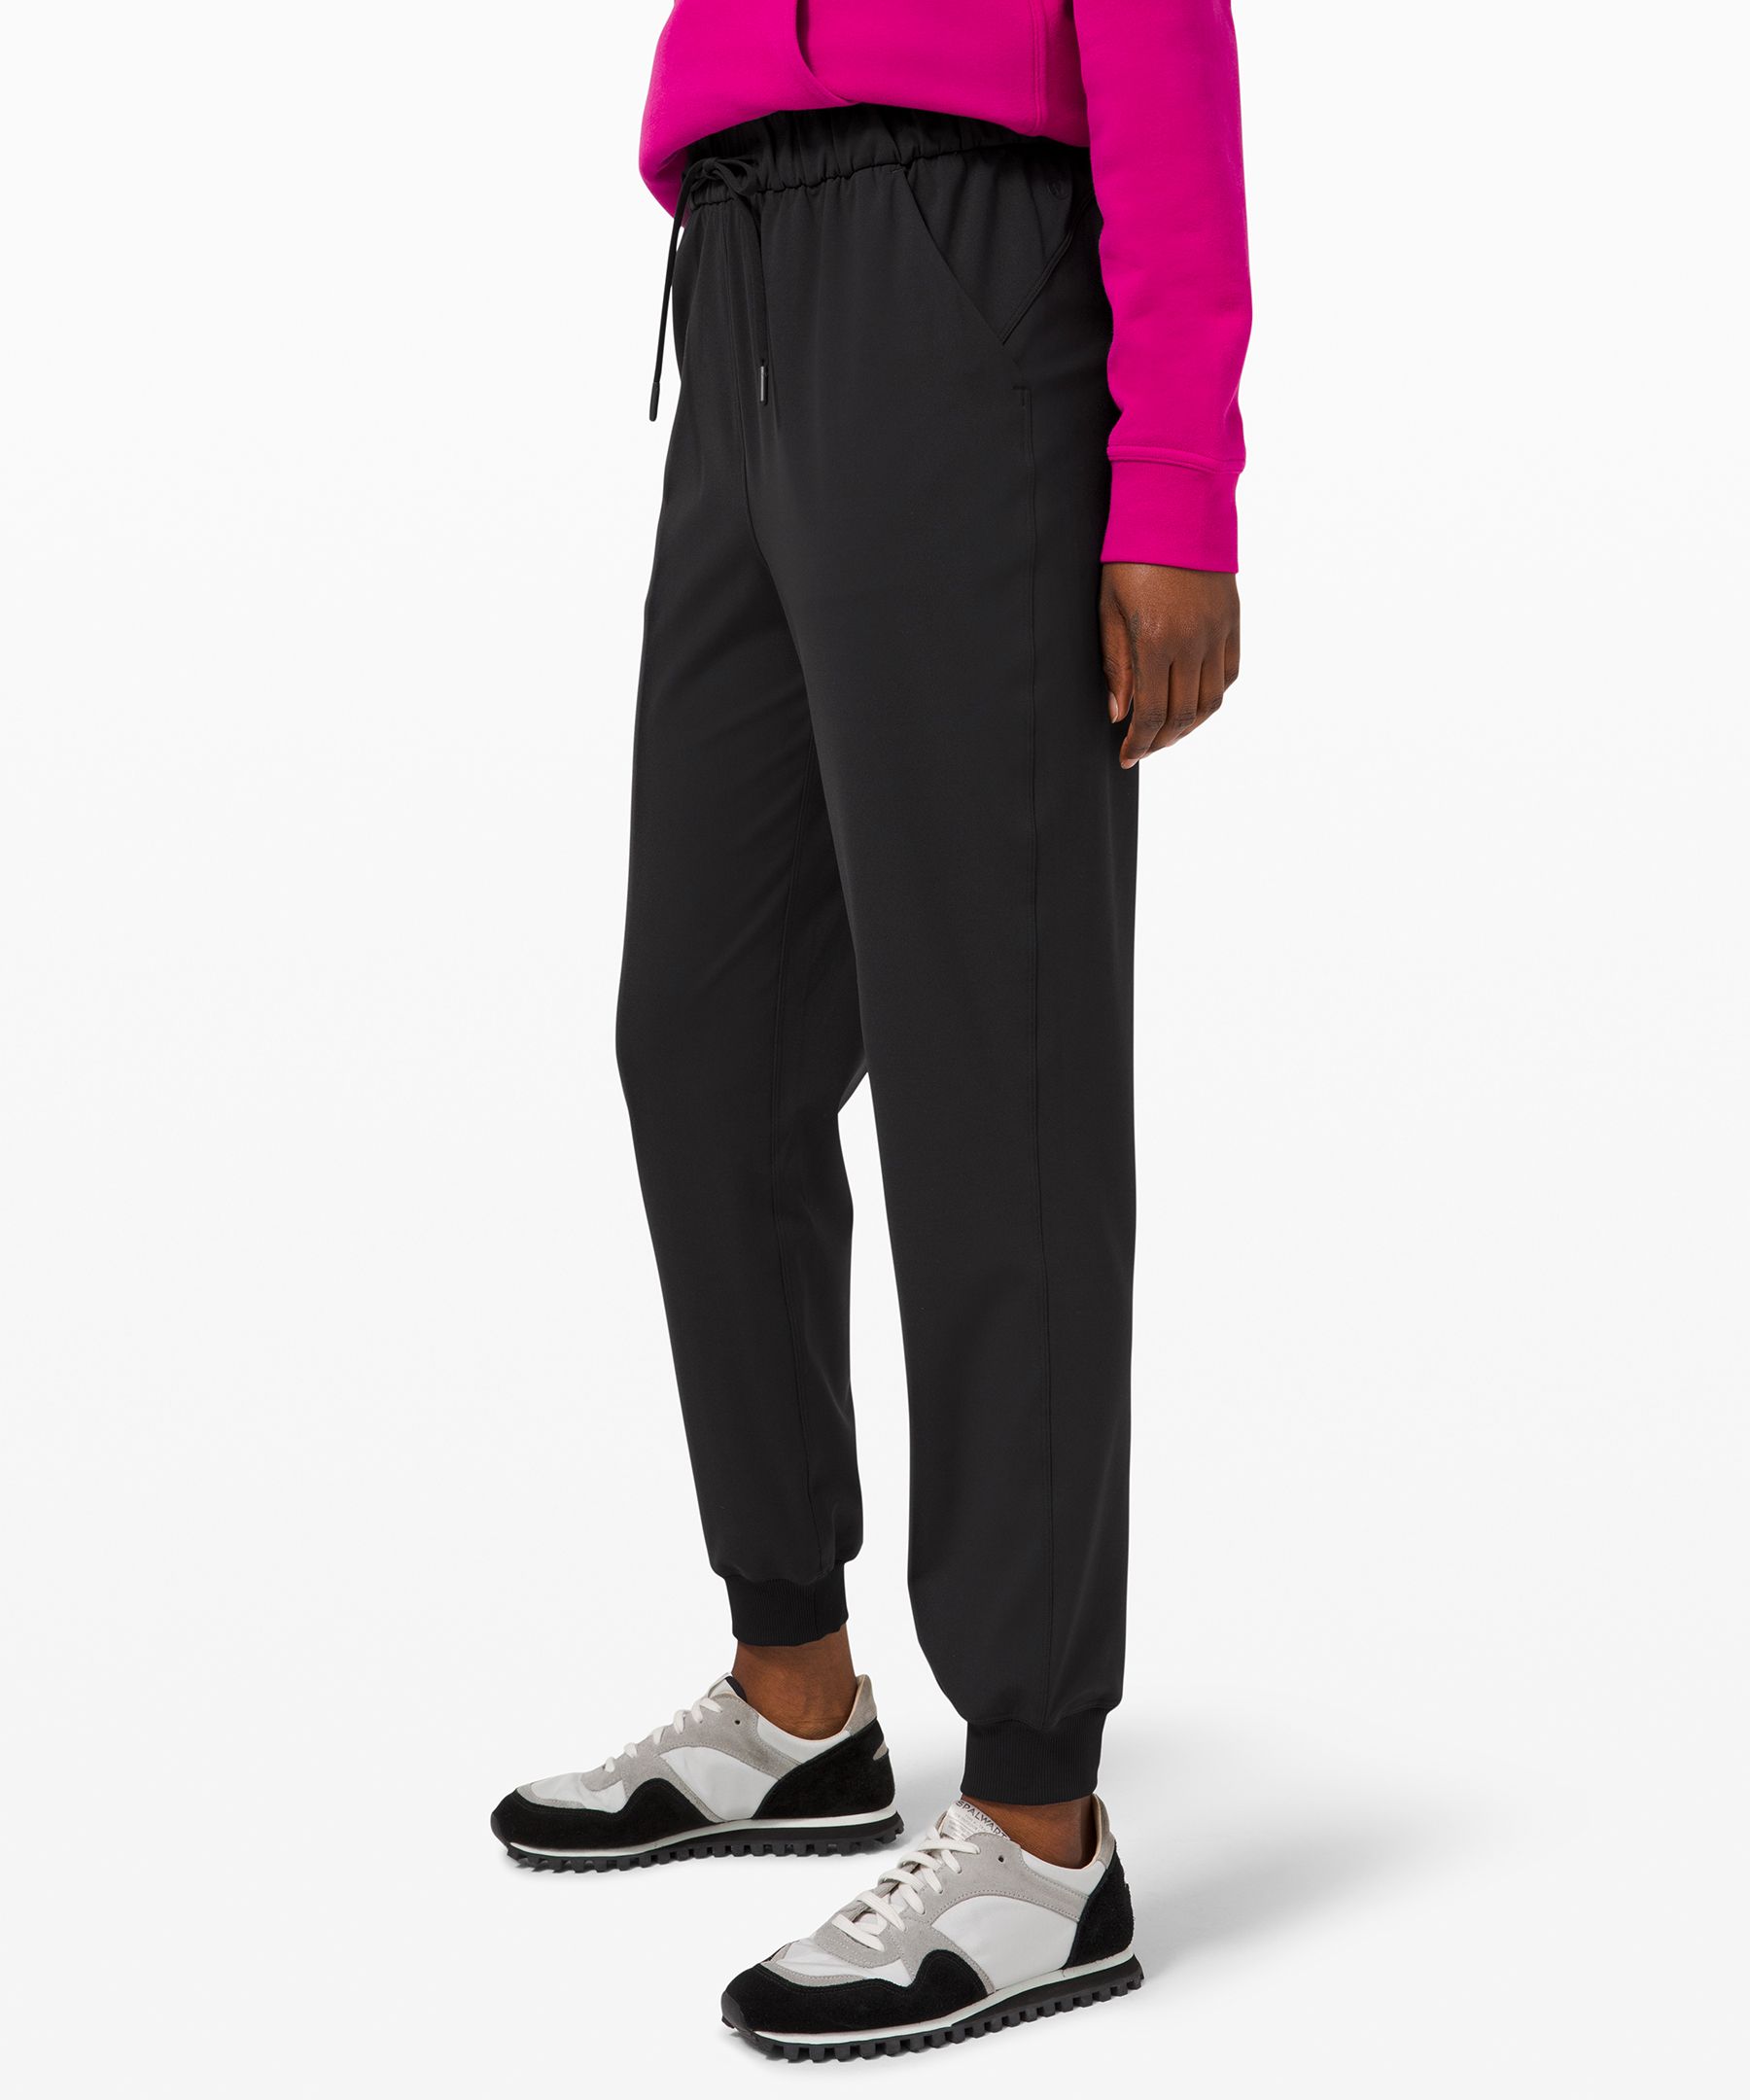 Lululemon Women joggers Stretch Luxtreme High-Rise Pant Black Full Length  Size 4